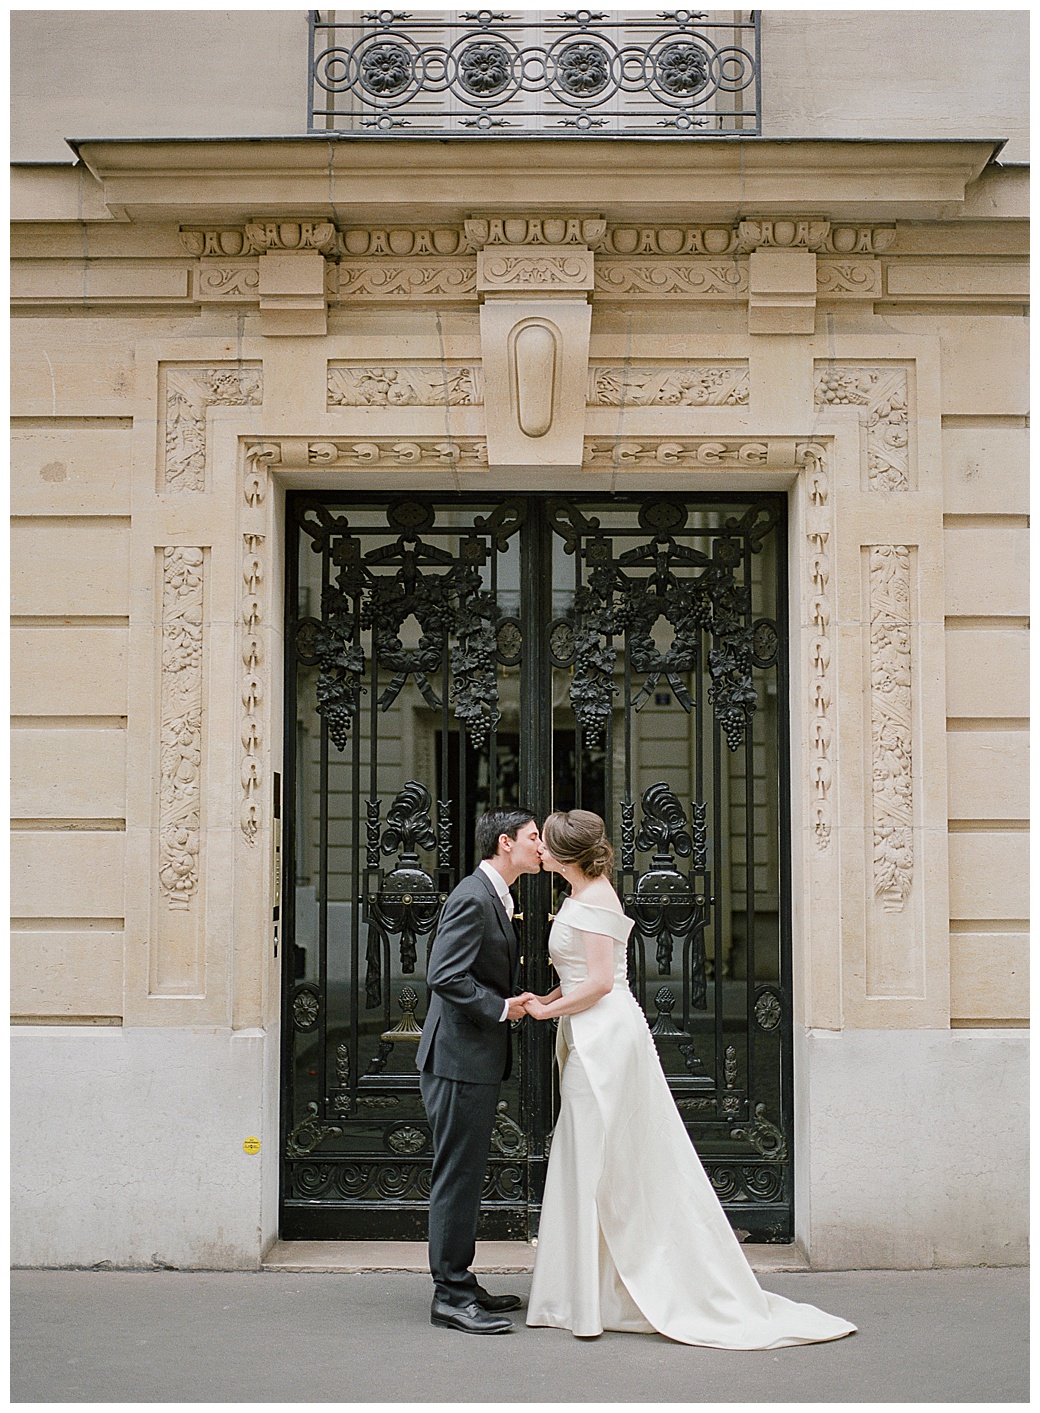 paris elopement, wedding officiant in paris, paris wedding, paris bride and groom